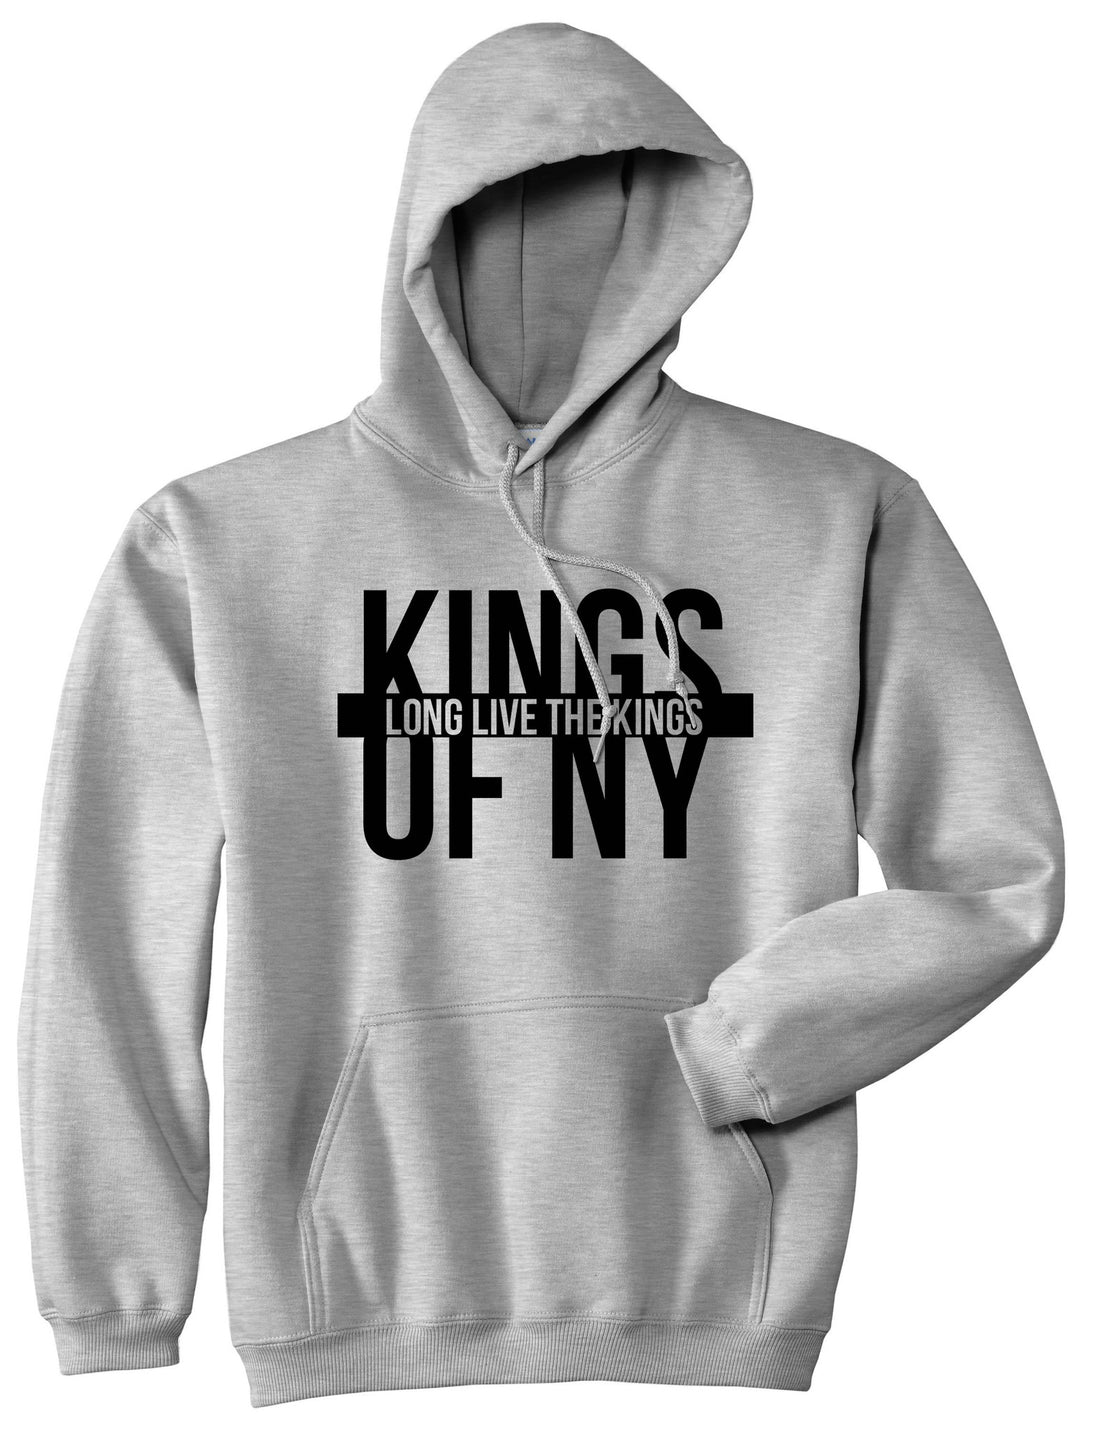 Long Live the Kings Pullover Hoodie Hoody in Grey by Kings Of NY